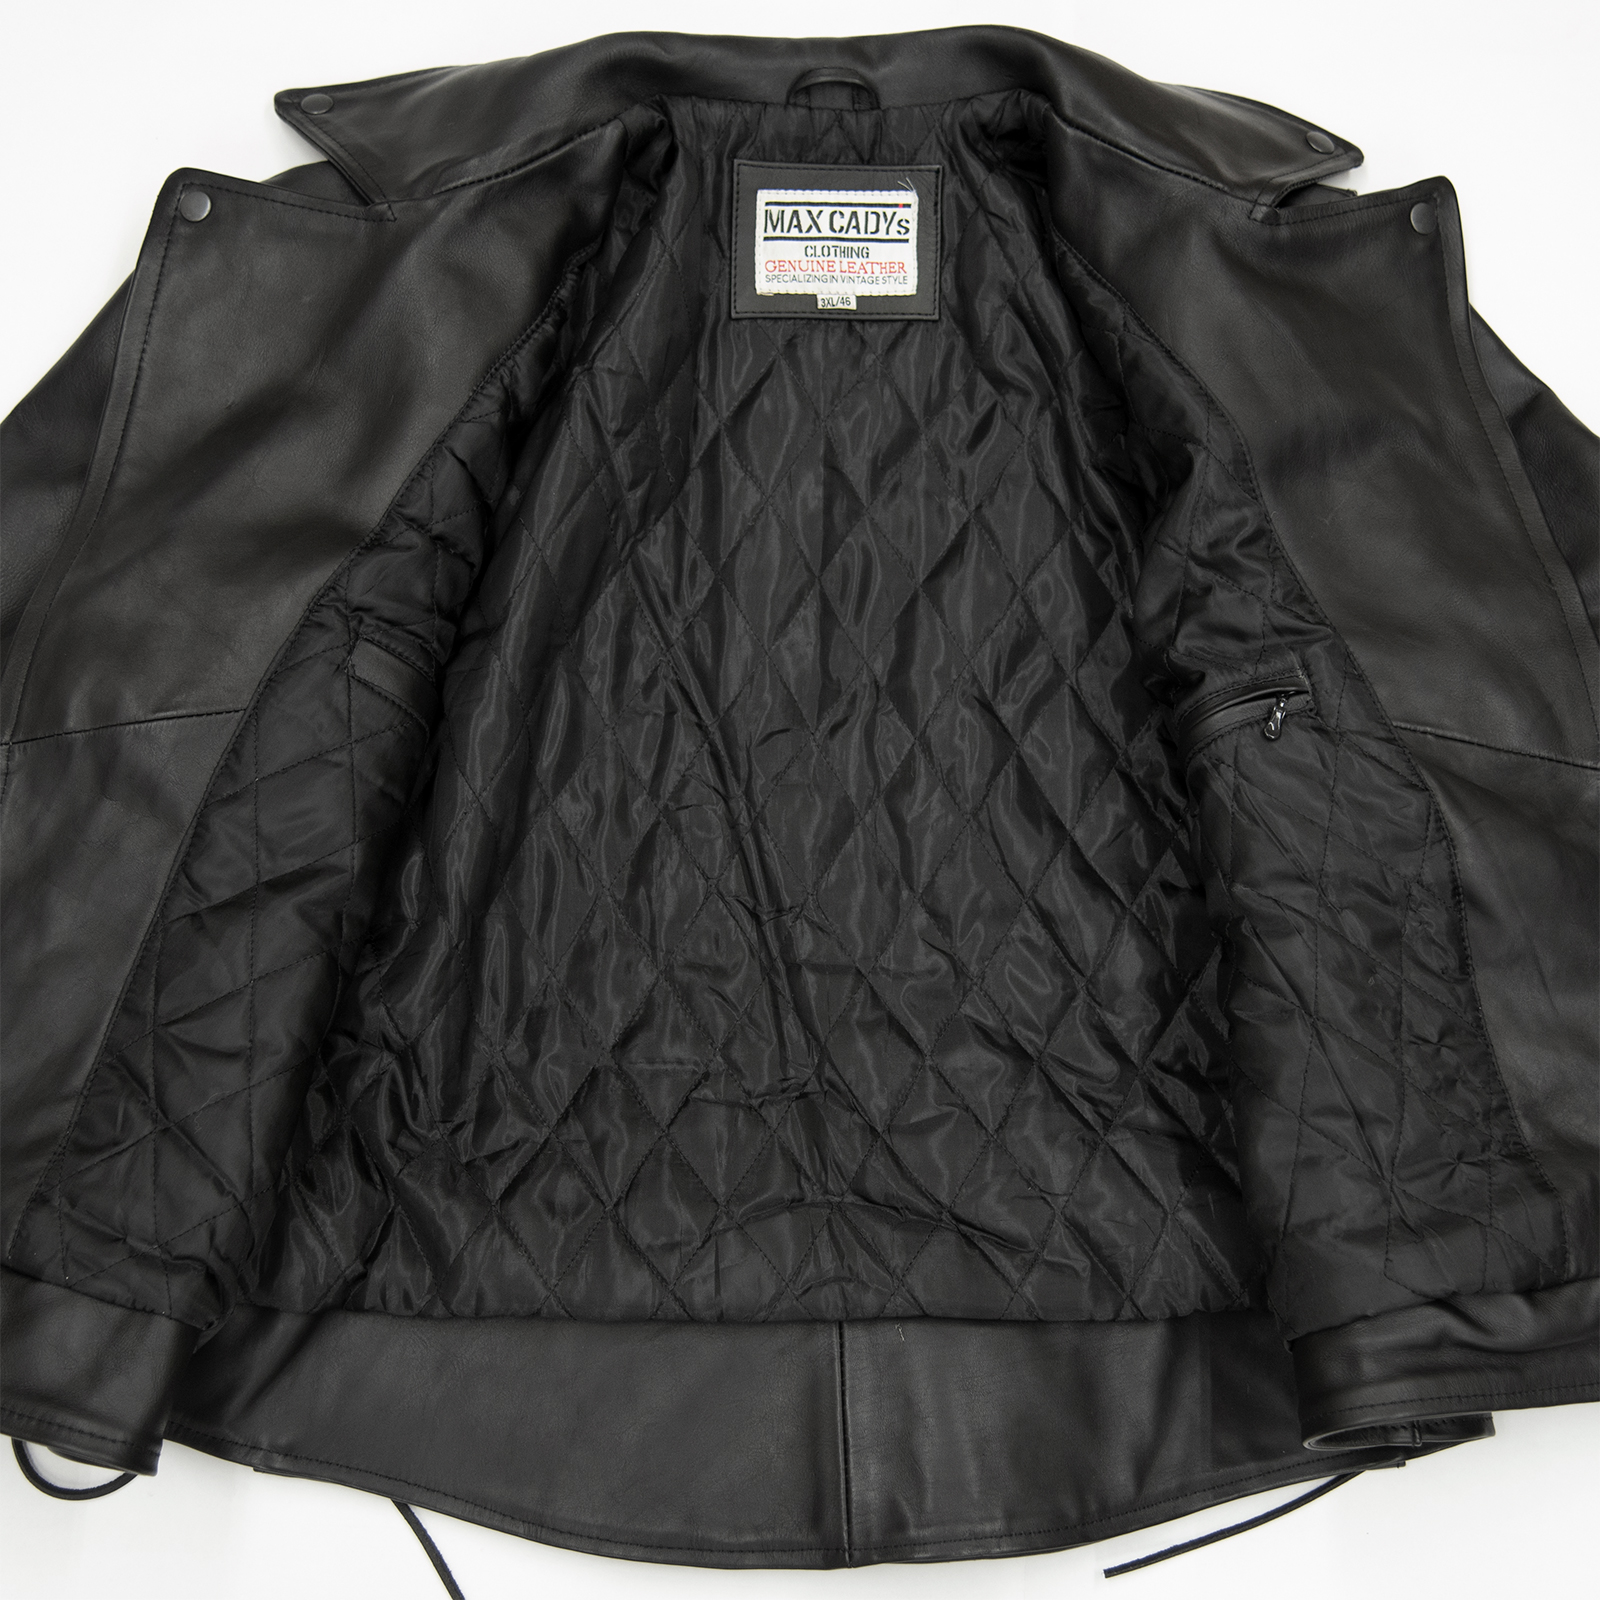 Terminator Leather Jacket - MAX CADY